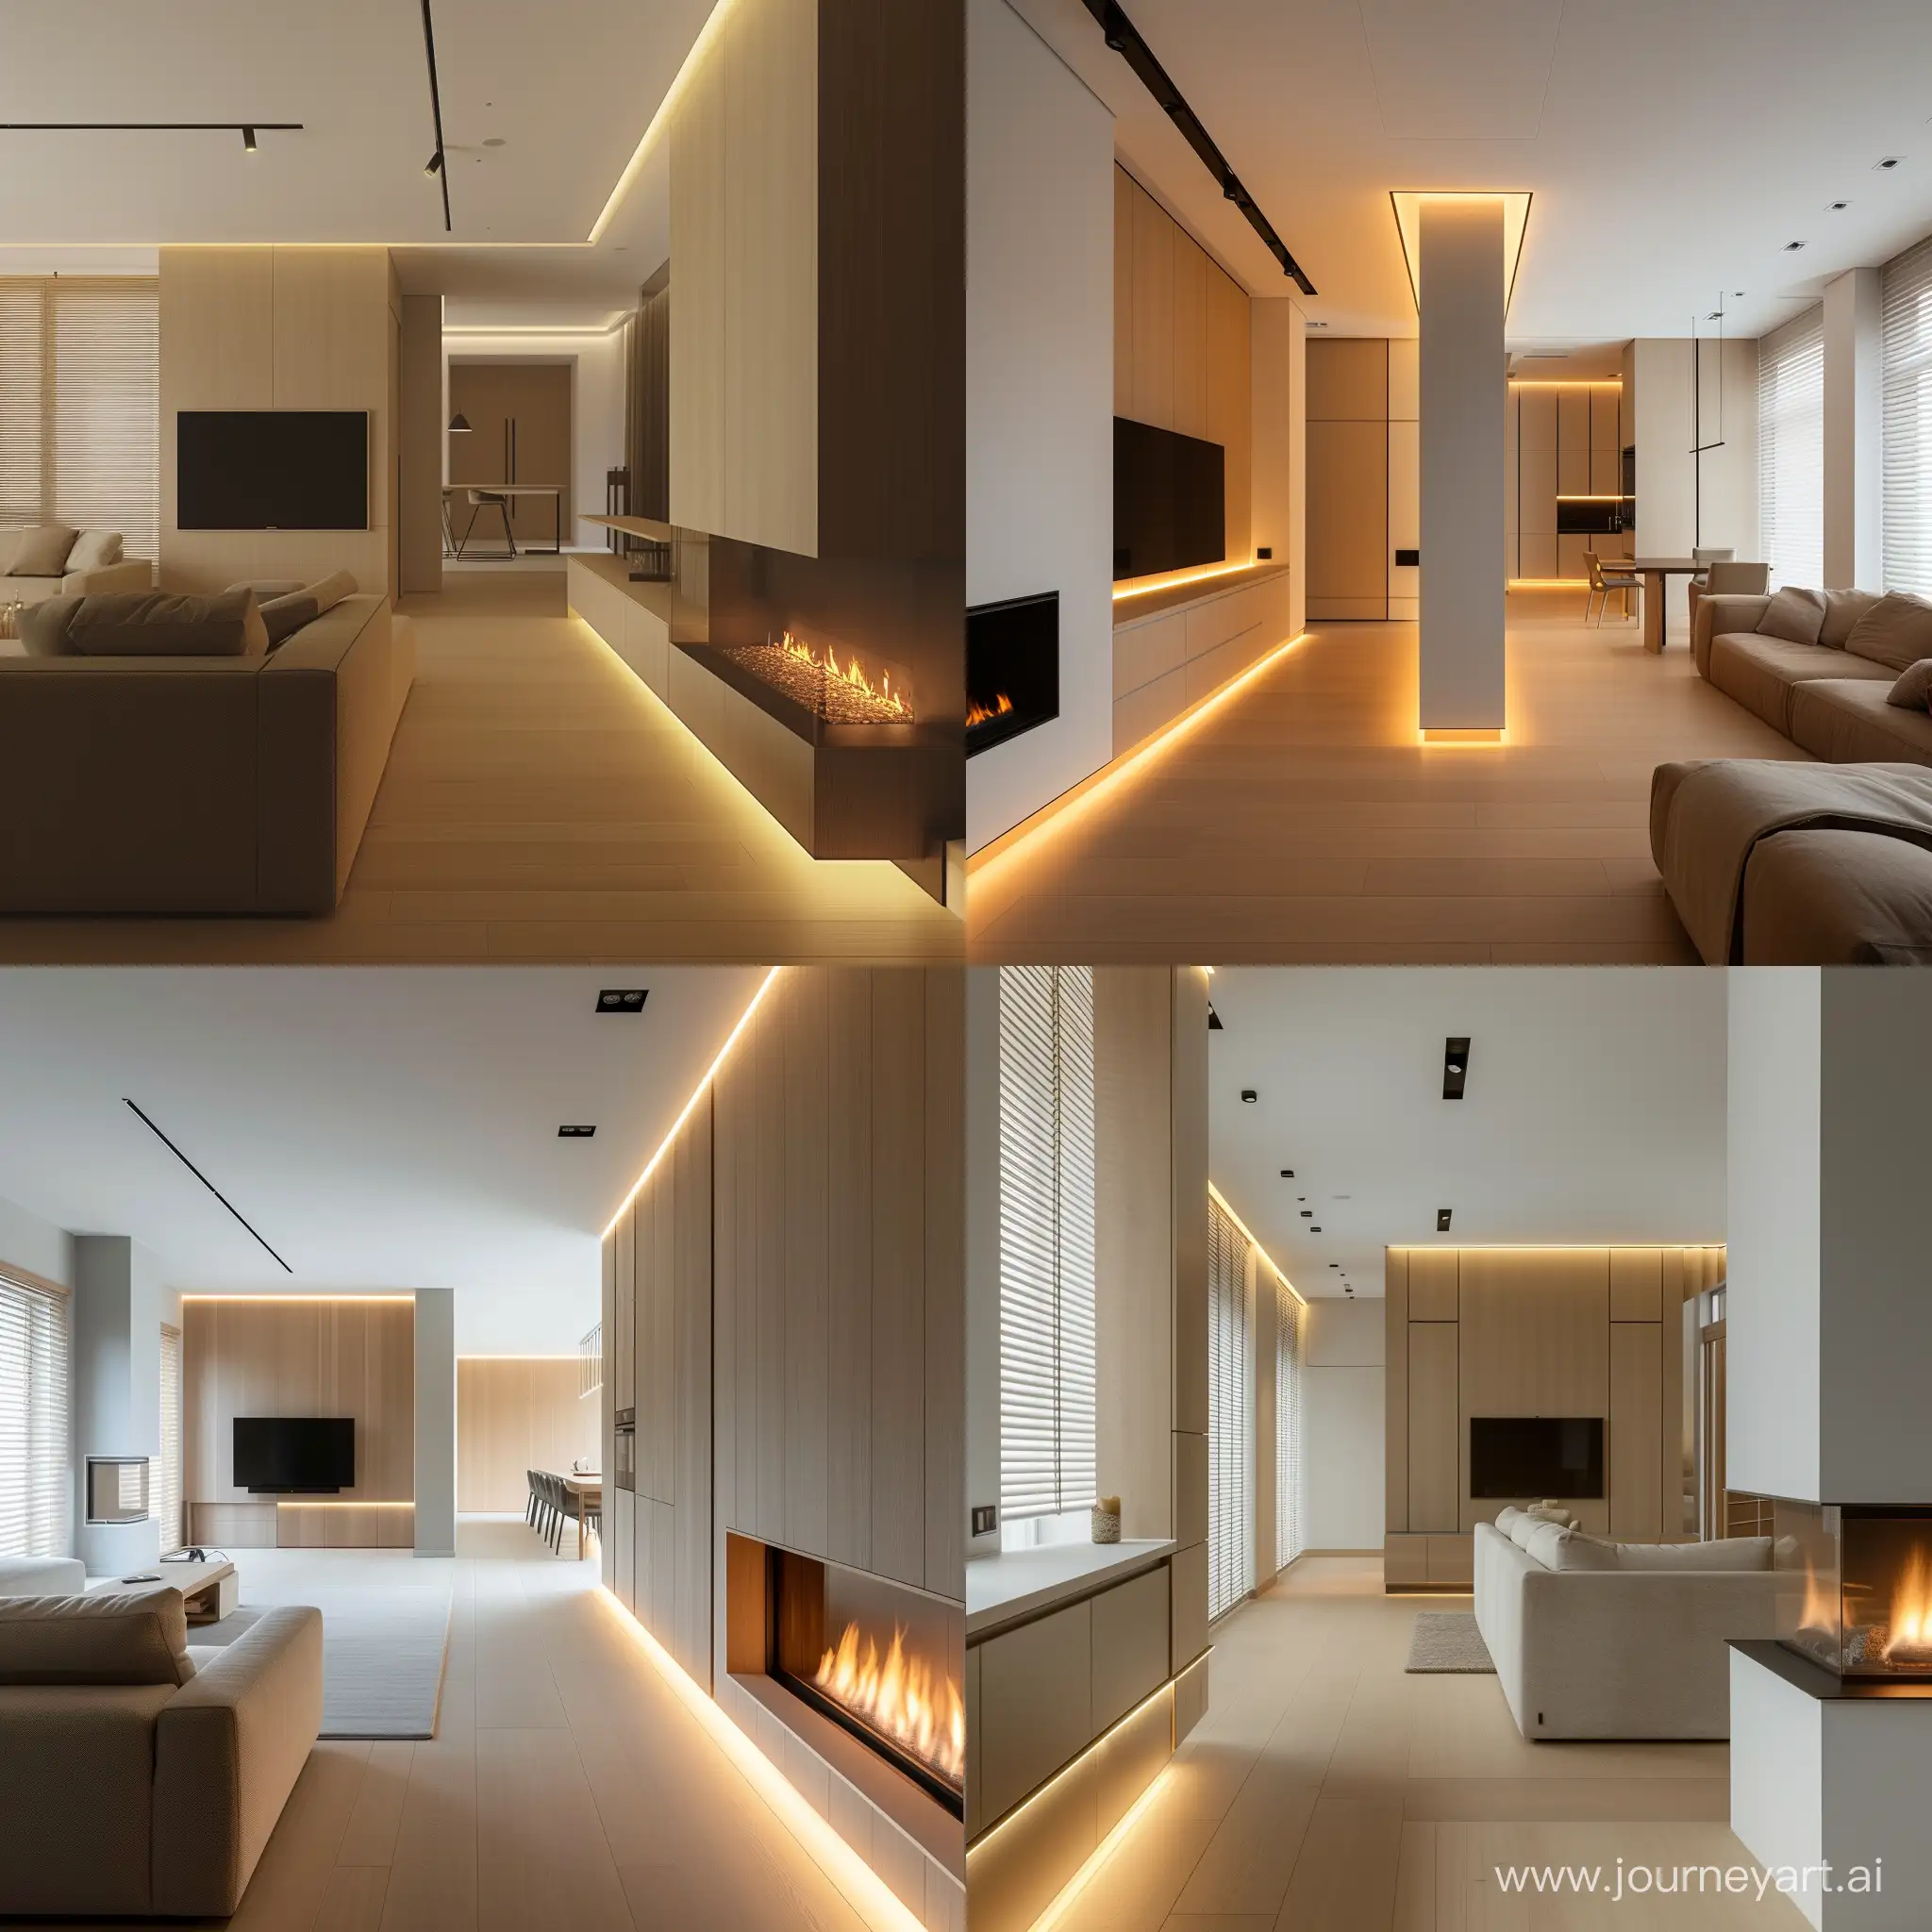 Modern-Minimalist-Interior-with-Illuminated-Veneered-Panels-and-Stylish-Furnishings